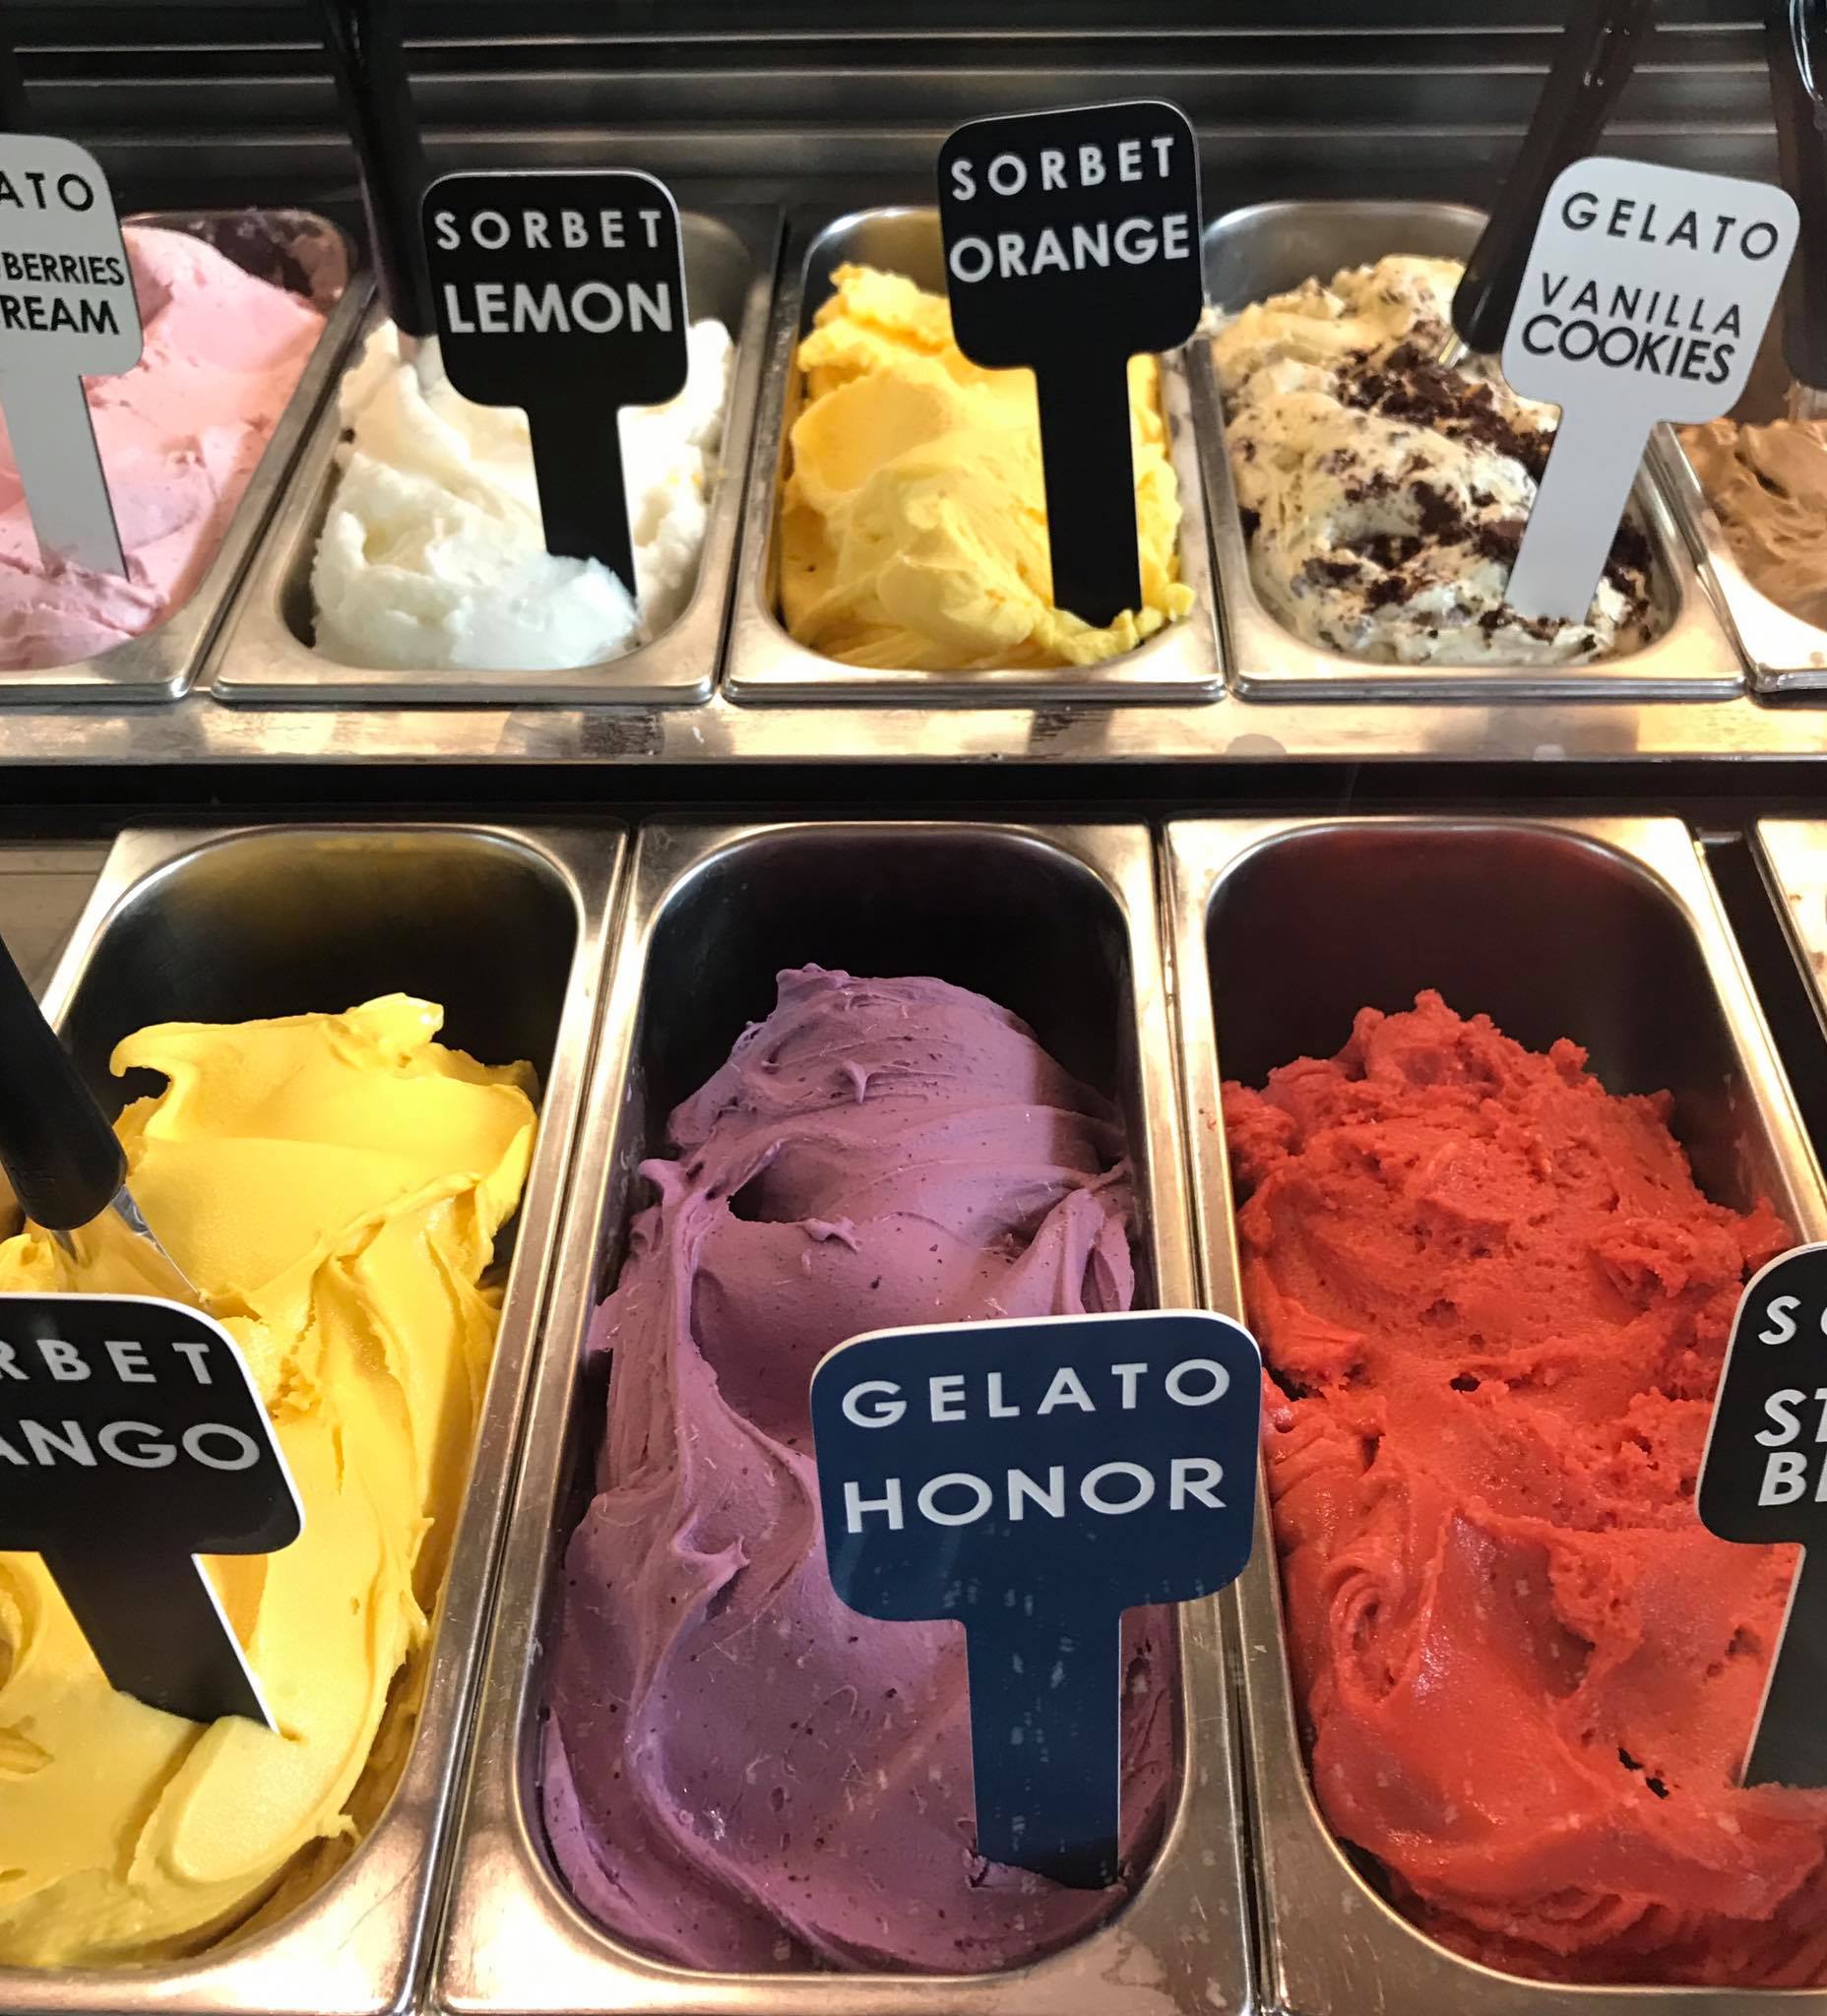 Zillion's: Βρήκαμε που θα φας το πιο νόστιμο παγωτό της πόλης